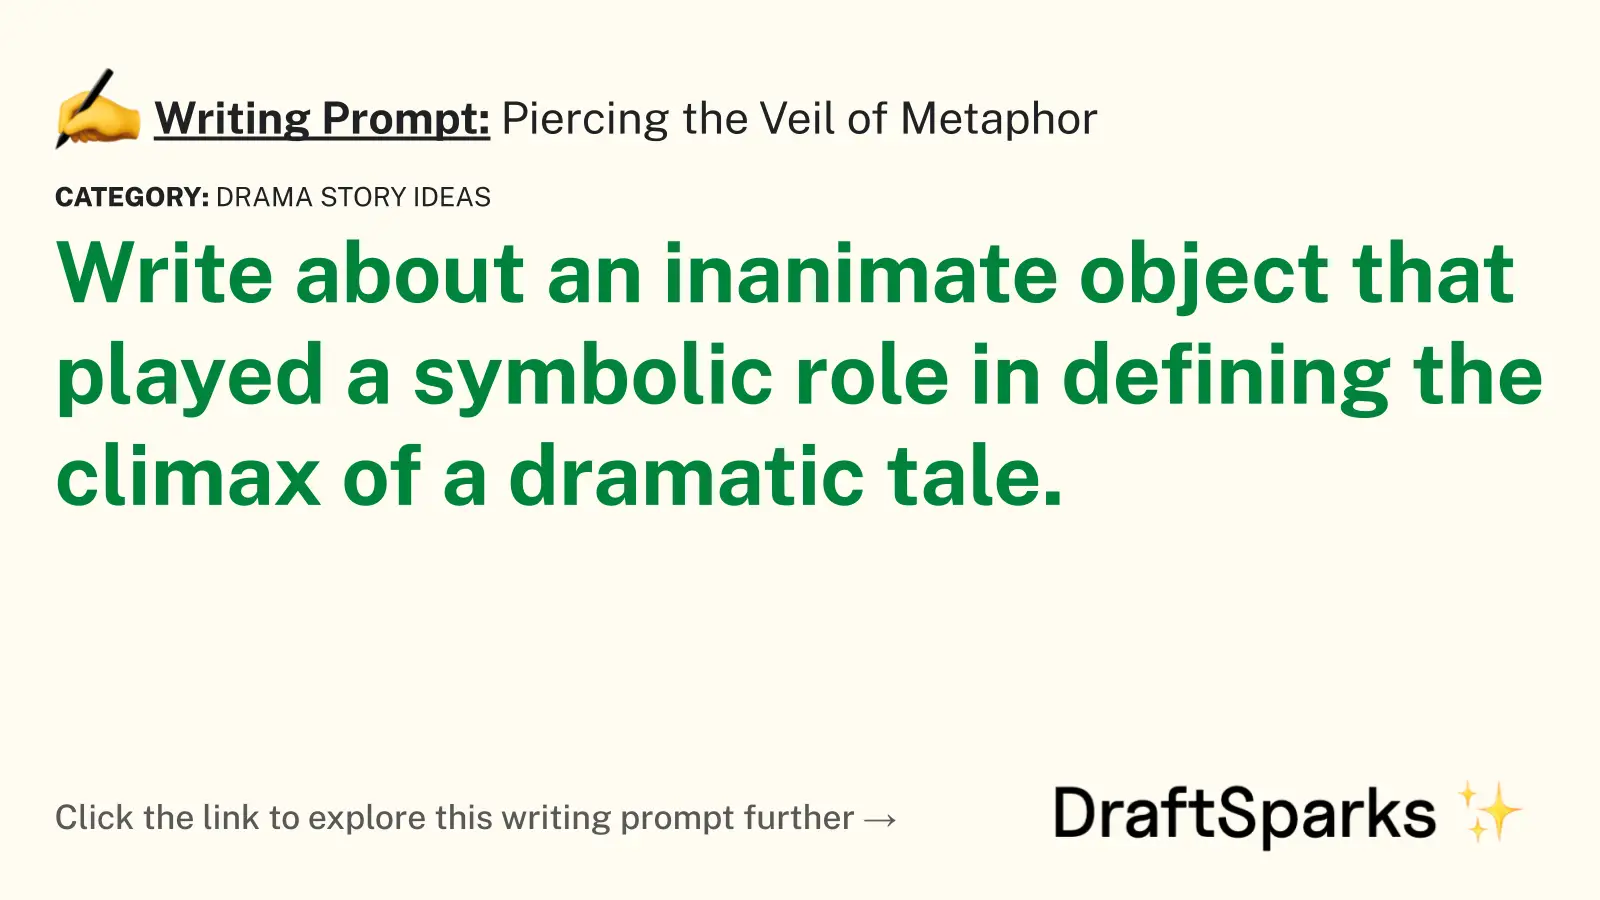 Piercing the Veil of Metaphor